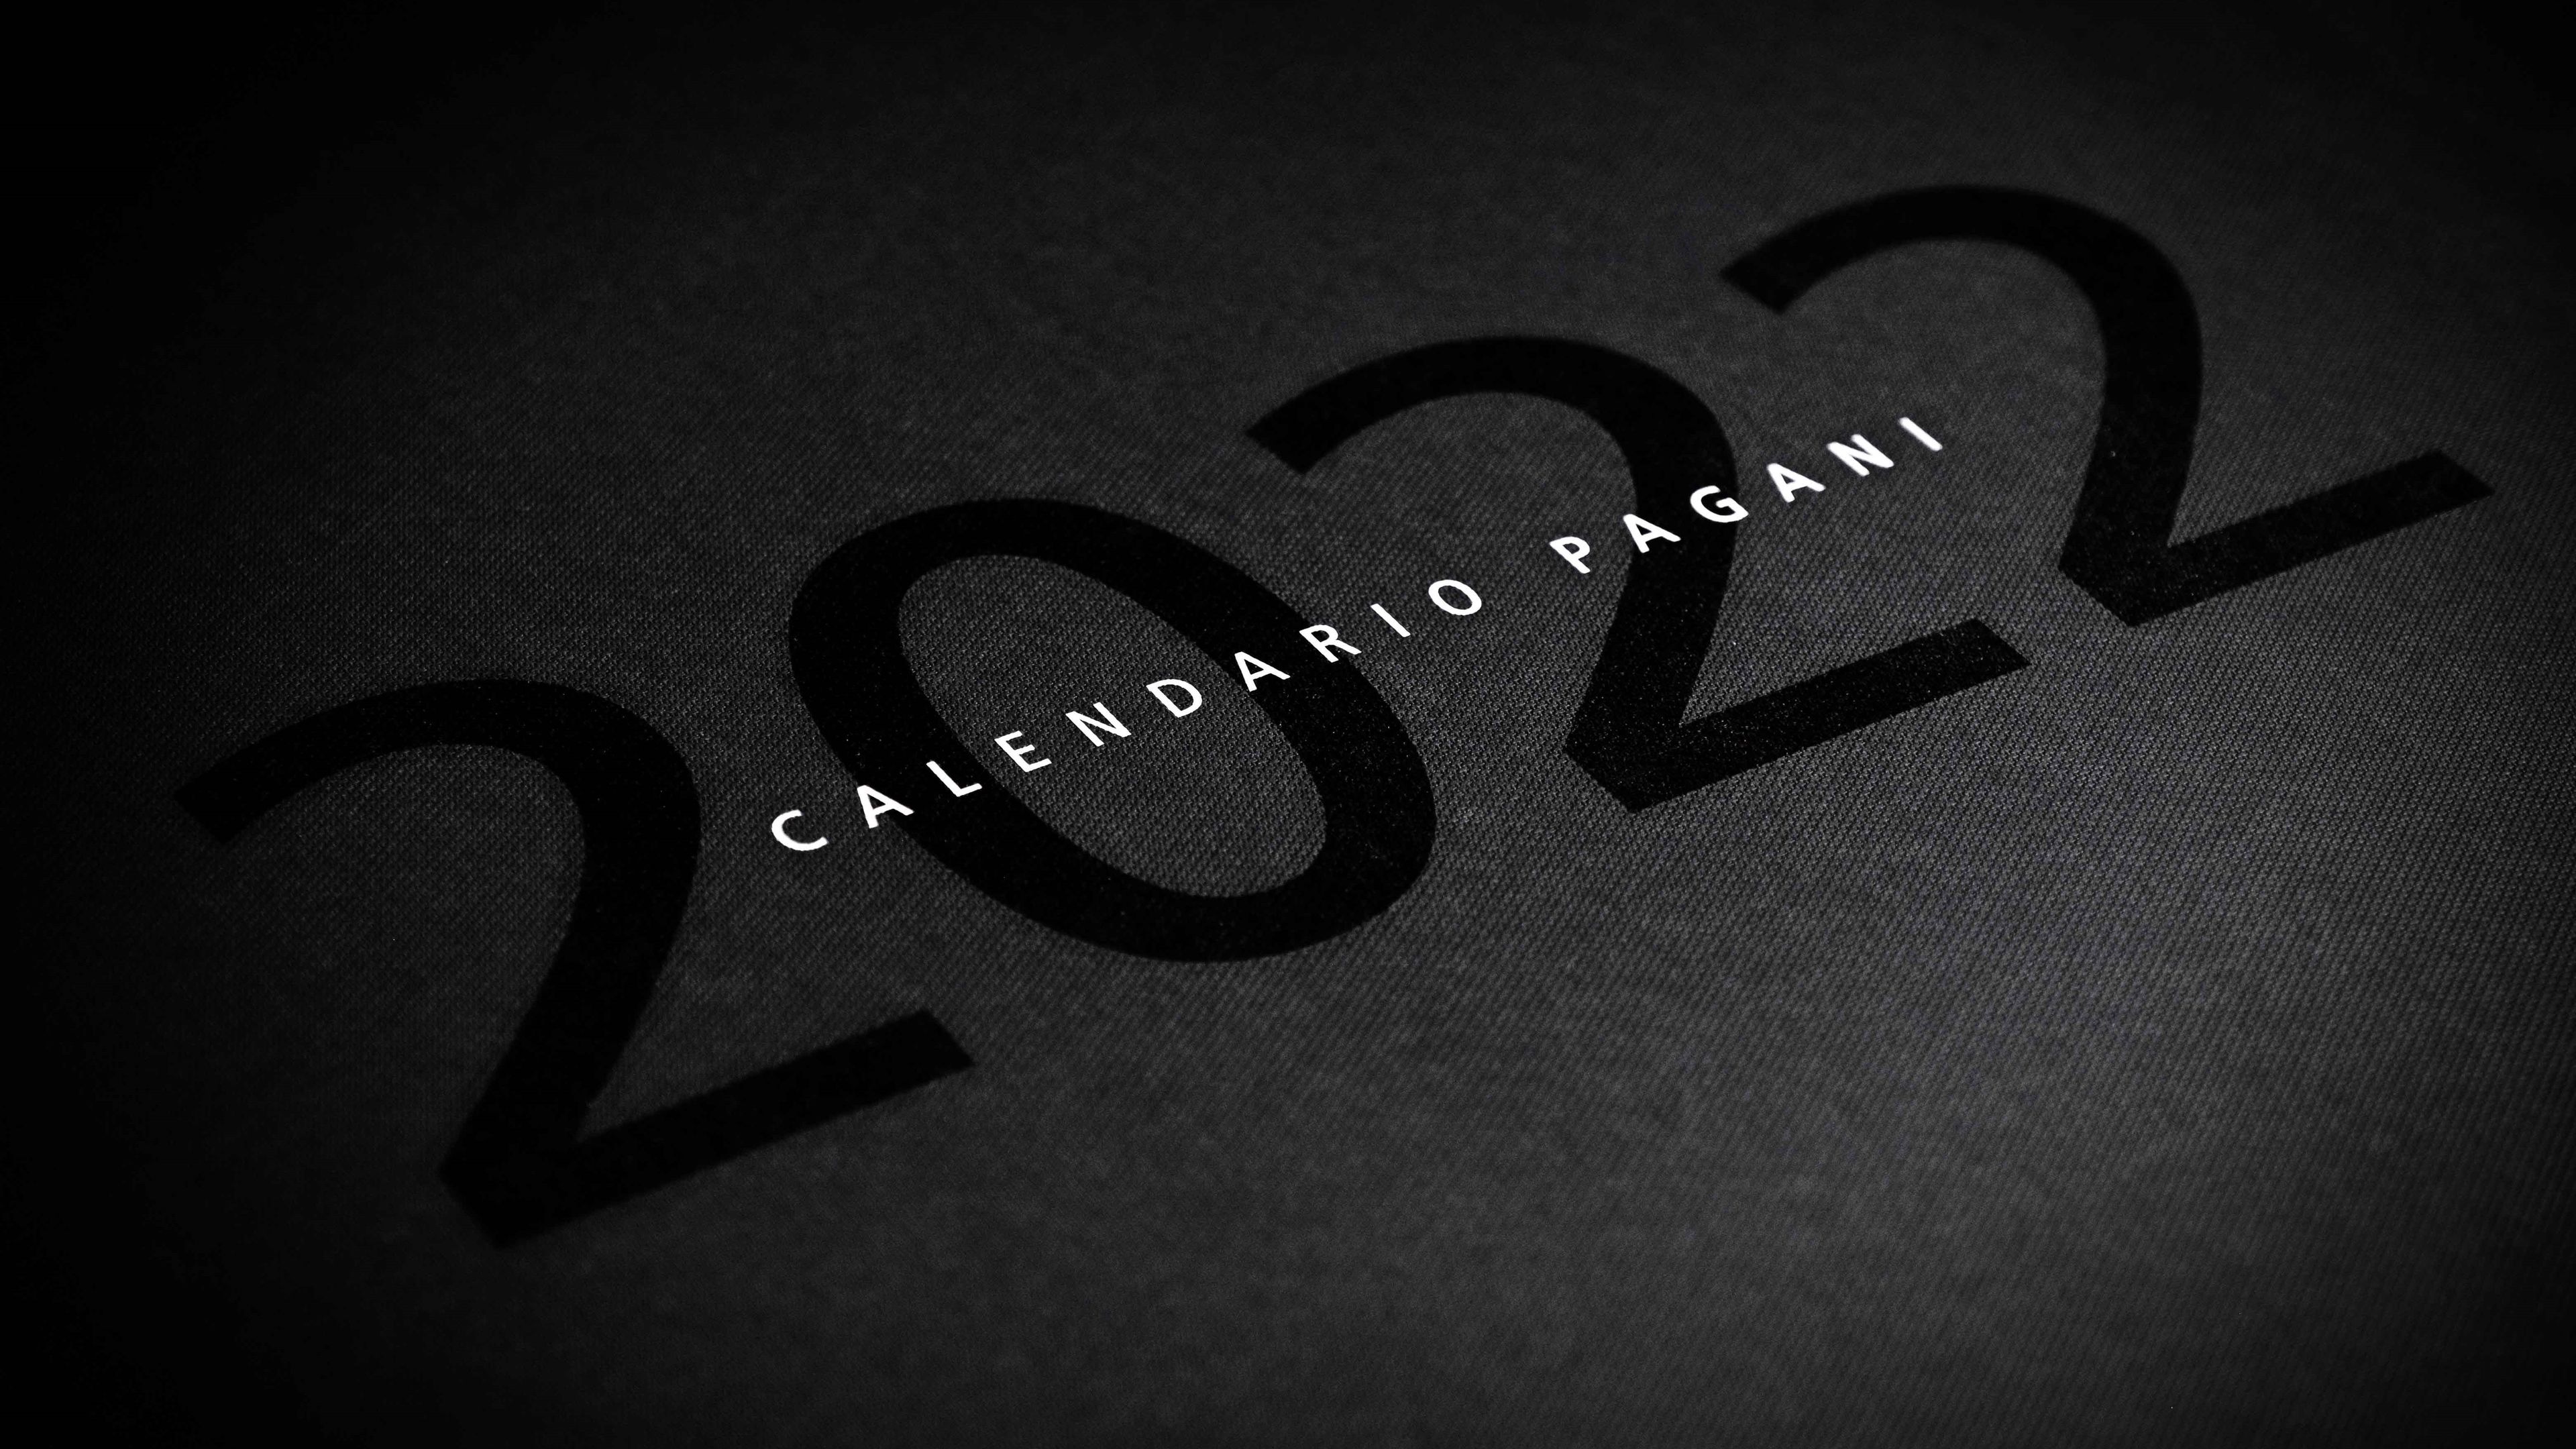 Calendario Pagani “2022: The Year of the R”